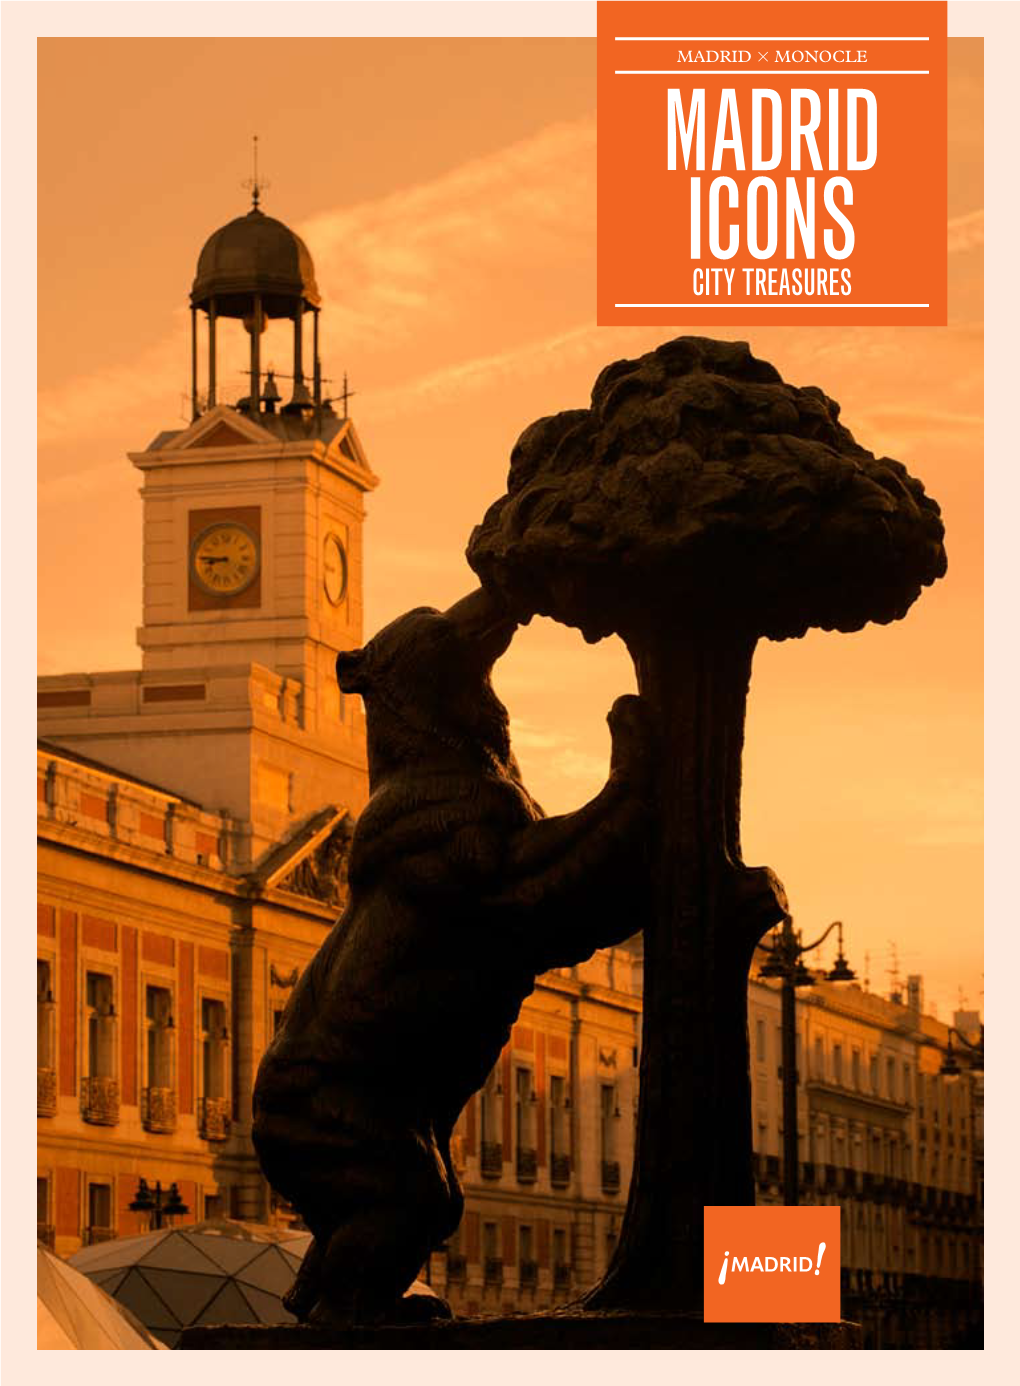 Madrid Icons City Treasures MADRID 3 MONOCLE Madrid Icons Introduction